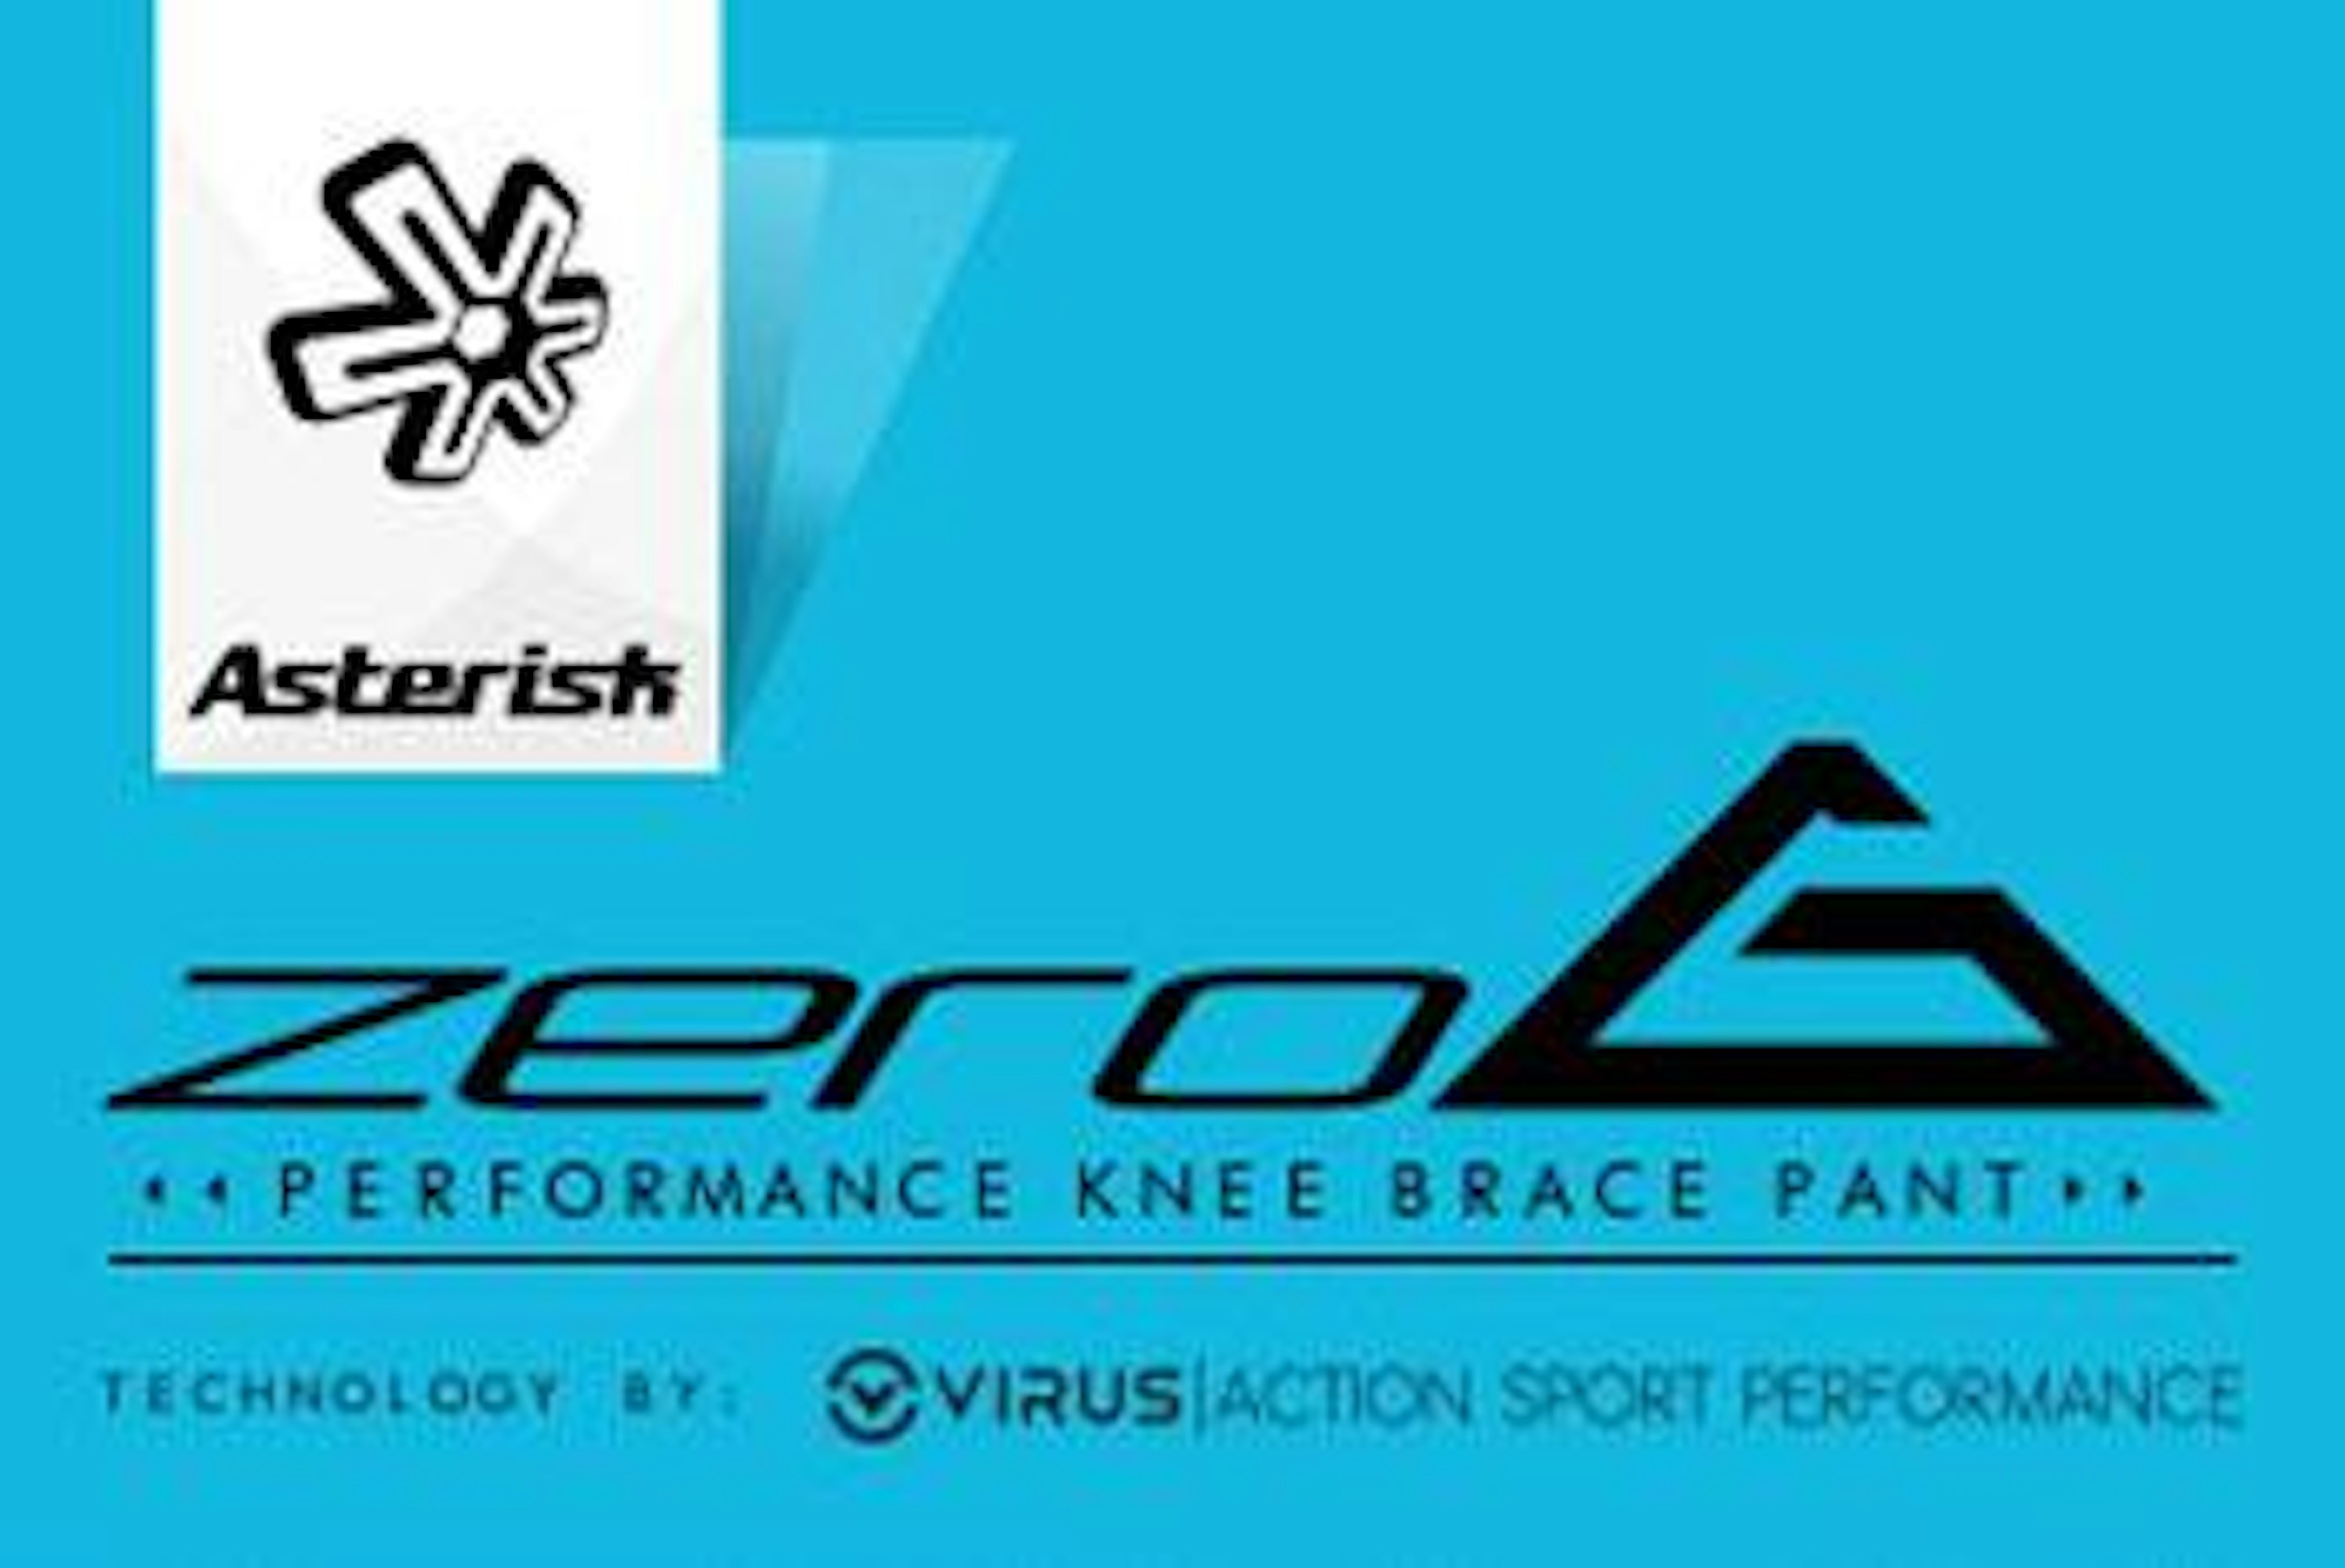 Asterisk - Zero G Knee Brace Pant